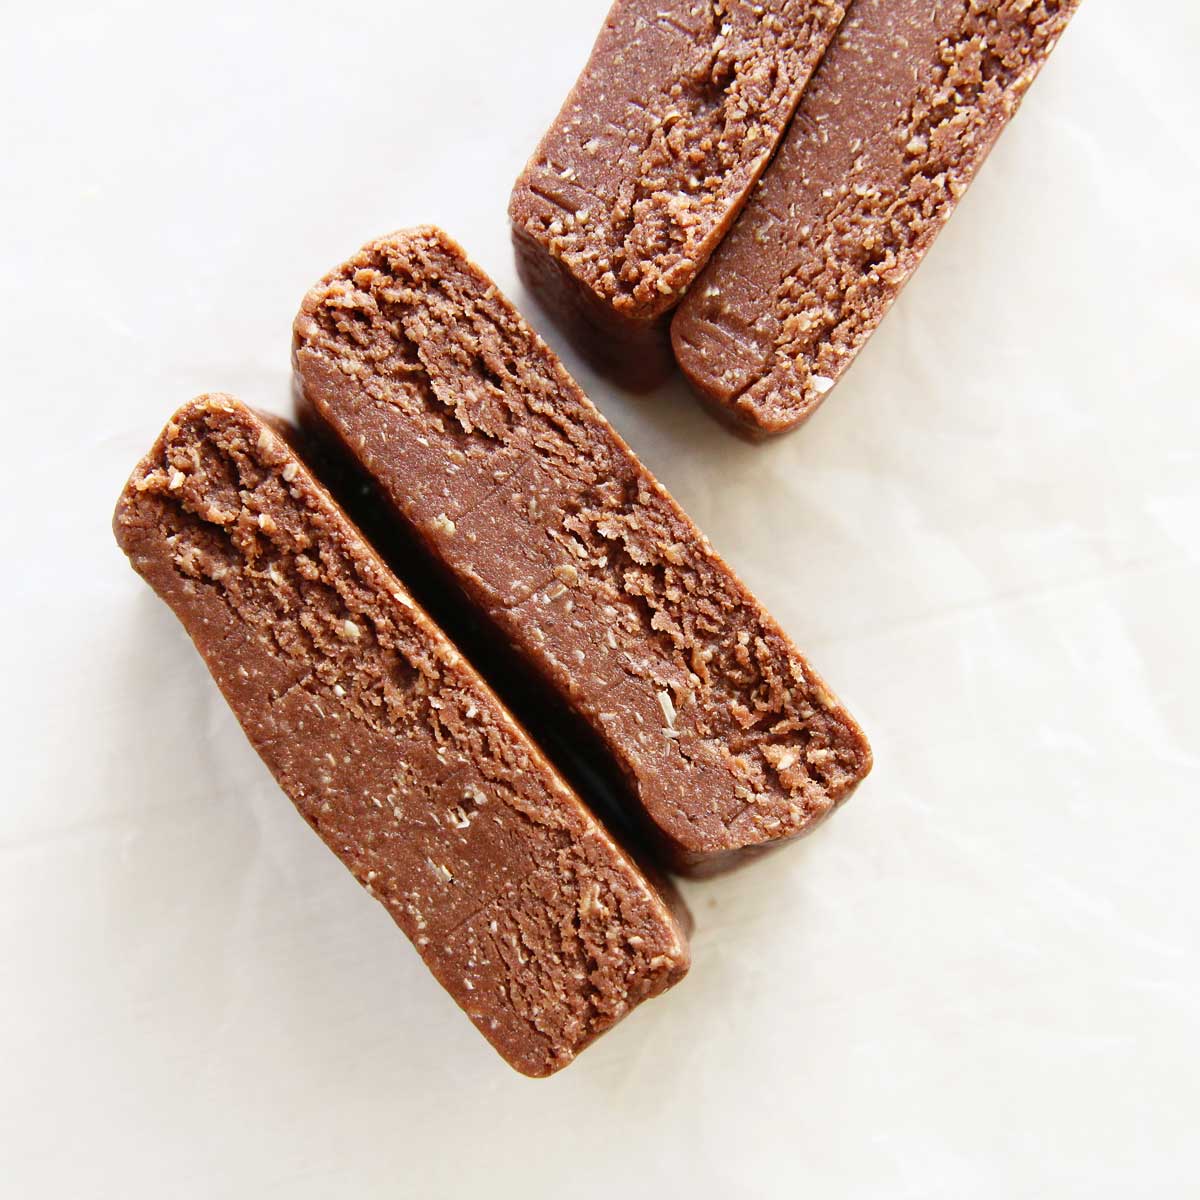 10-Minute Chocolate Peanut Butter Oatmeal Protein Bars - Peanut Butter Glaze